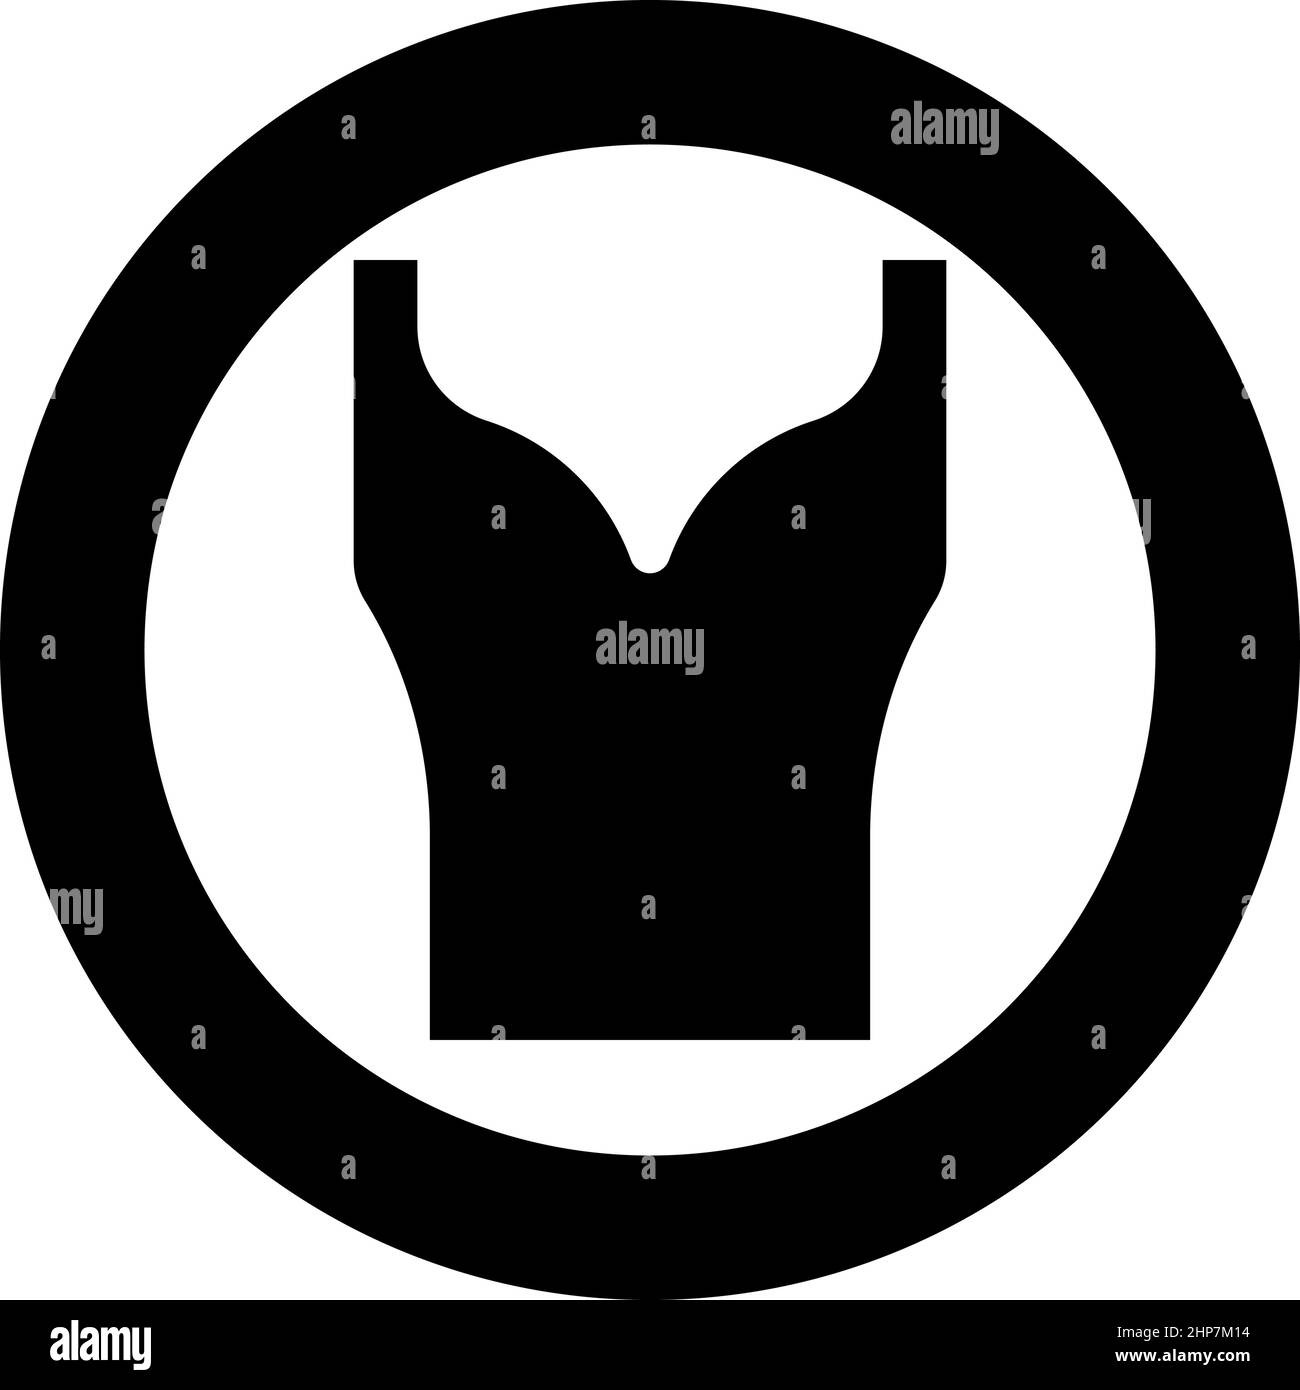 Damenbekleidung Top Kleid Jersey Hemd Bluse Pullover Singlet Symbol im Kreis rund schwarz Farbe Vektor Illustration Bild solide Kontur Stil Stock Vektor